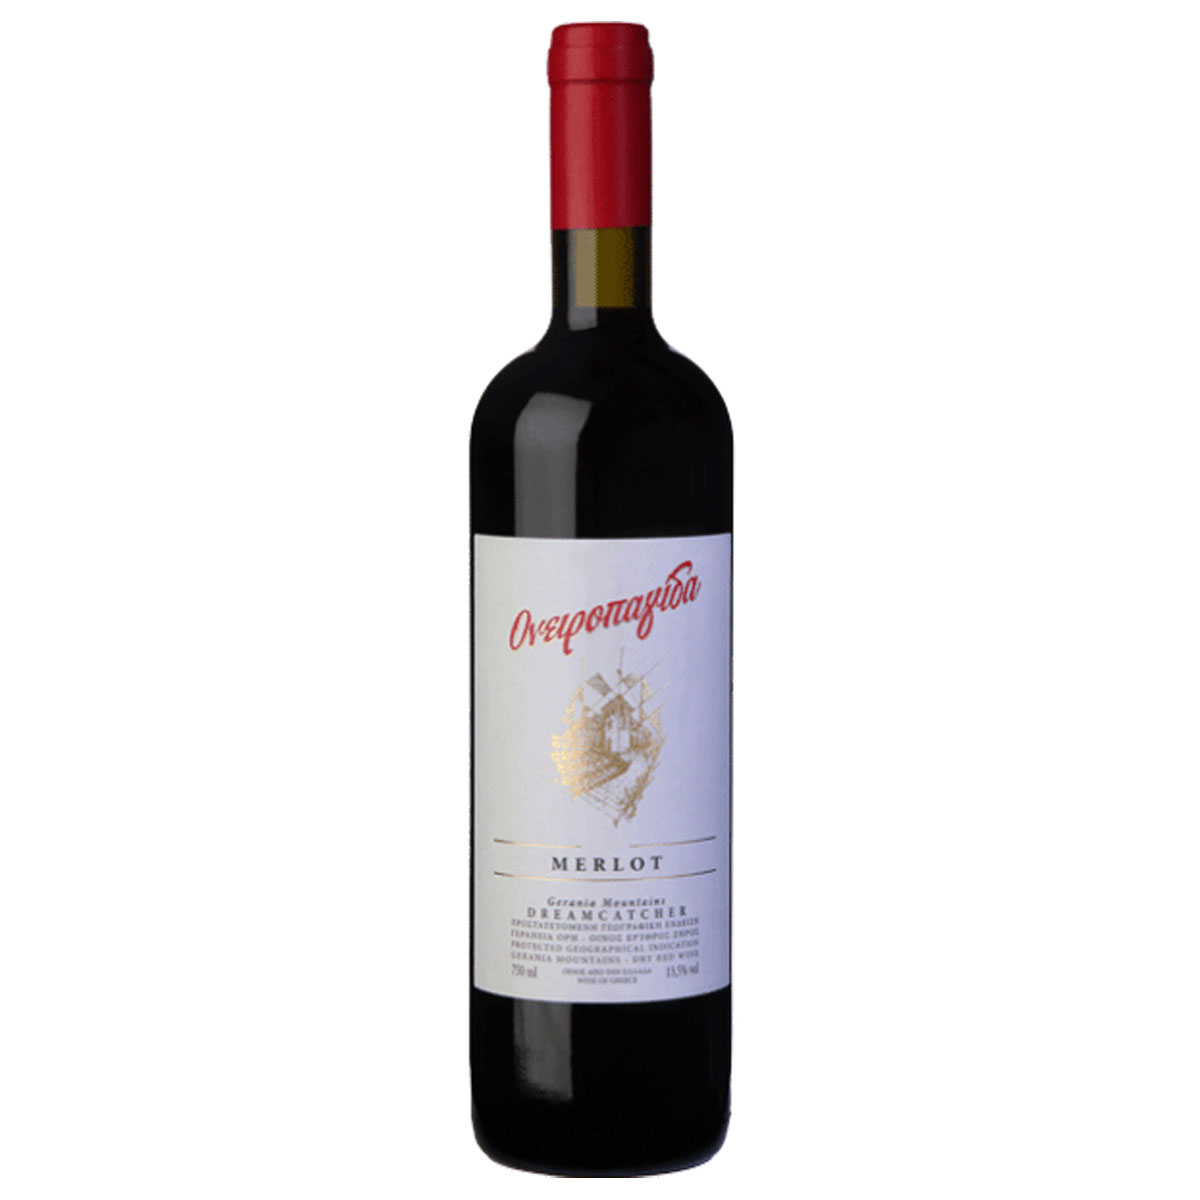 bottle of red wine oneiropagida merlot